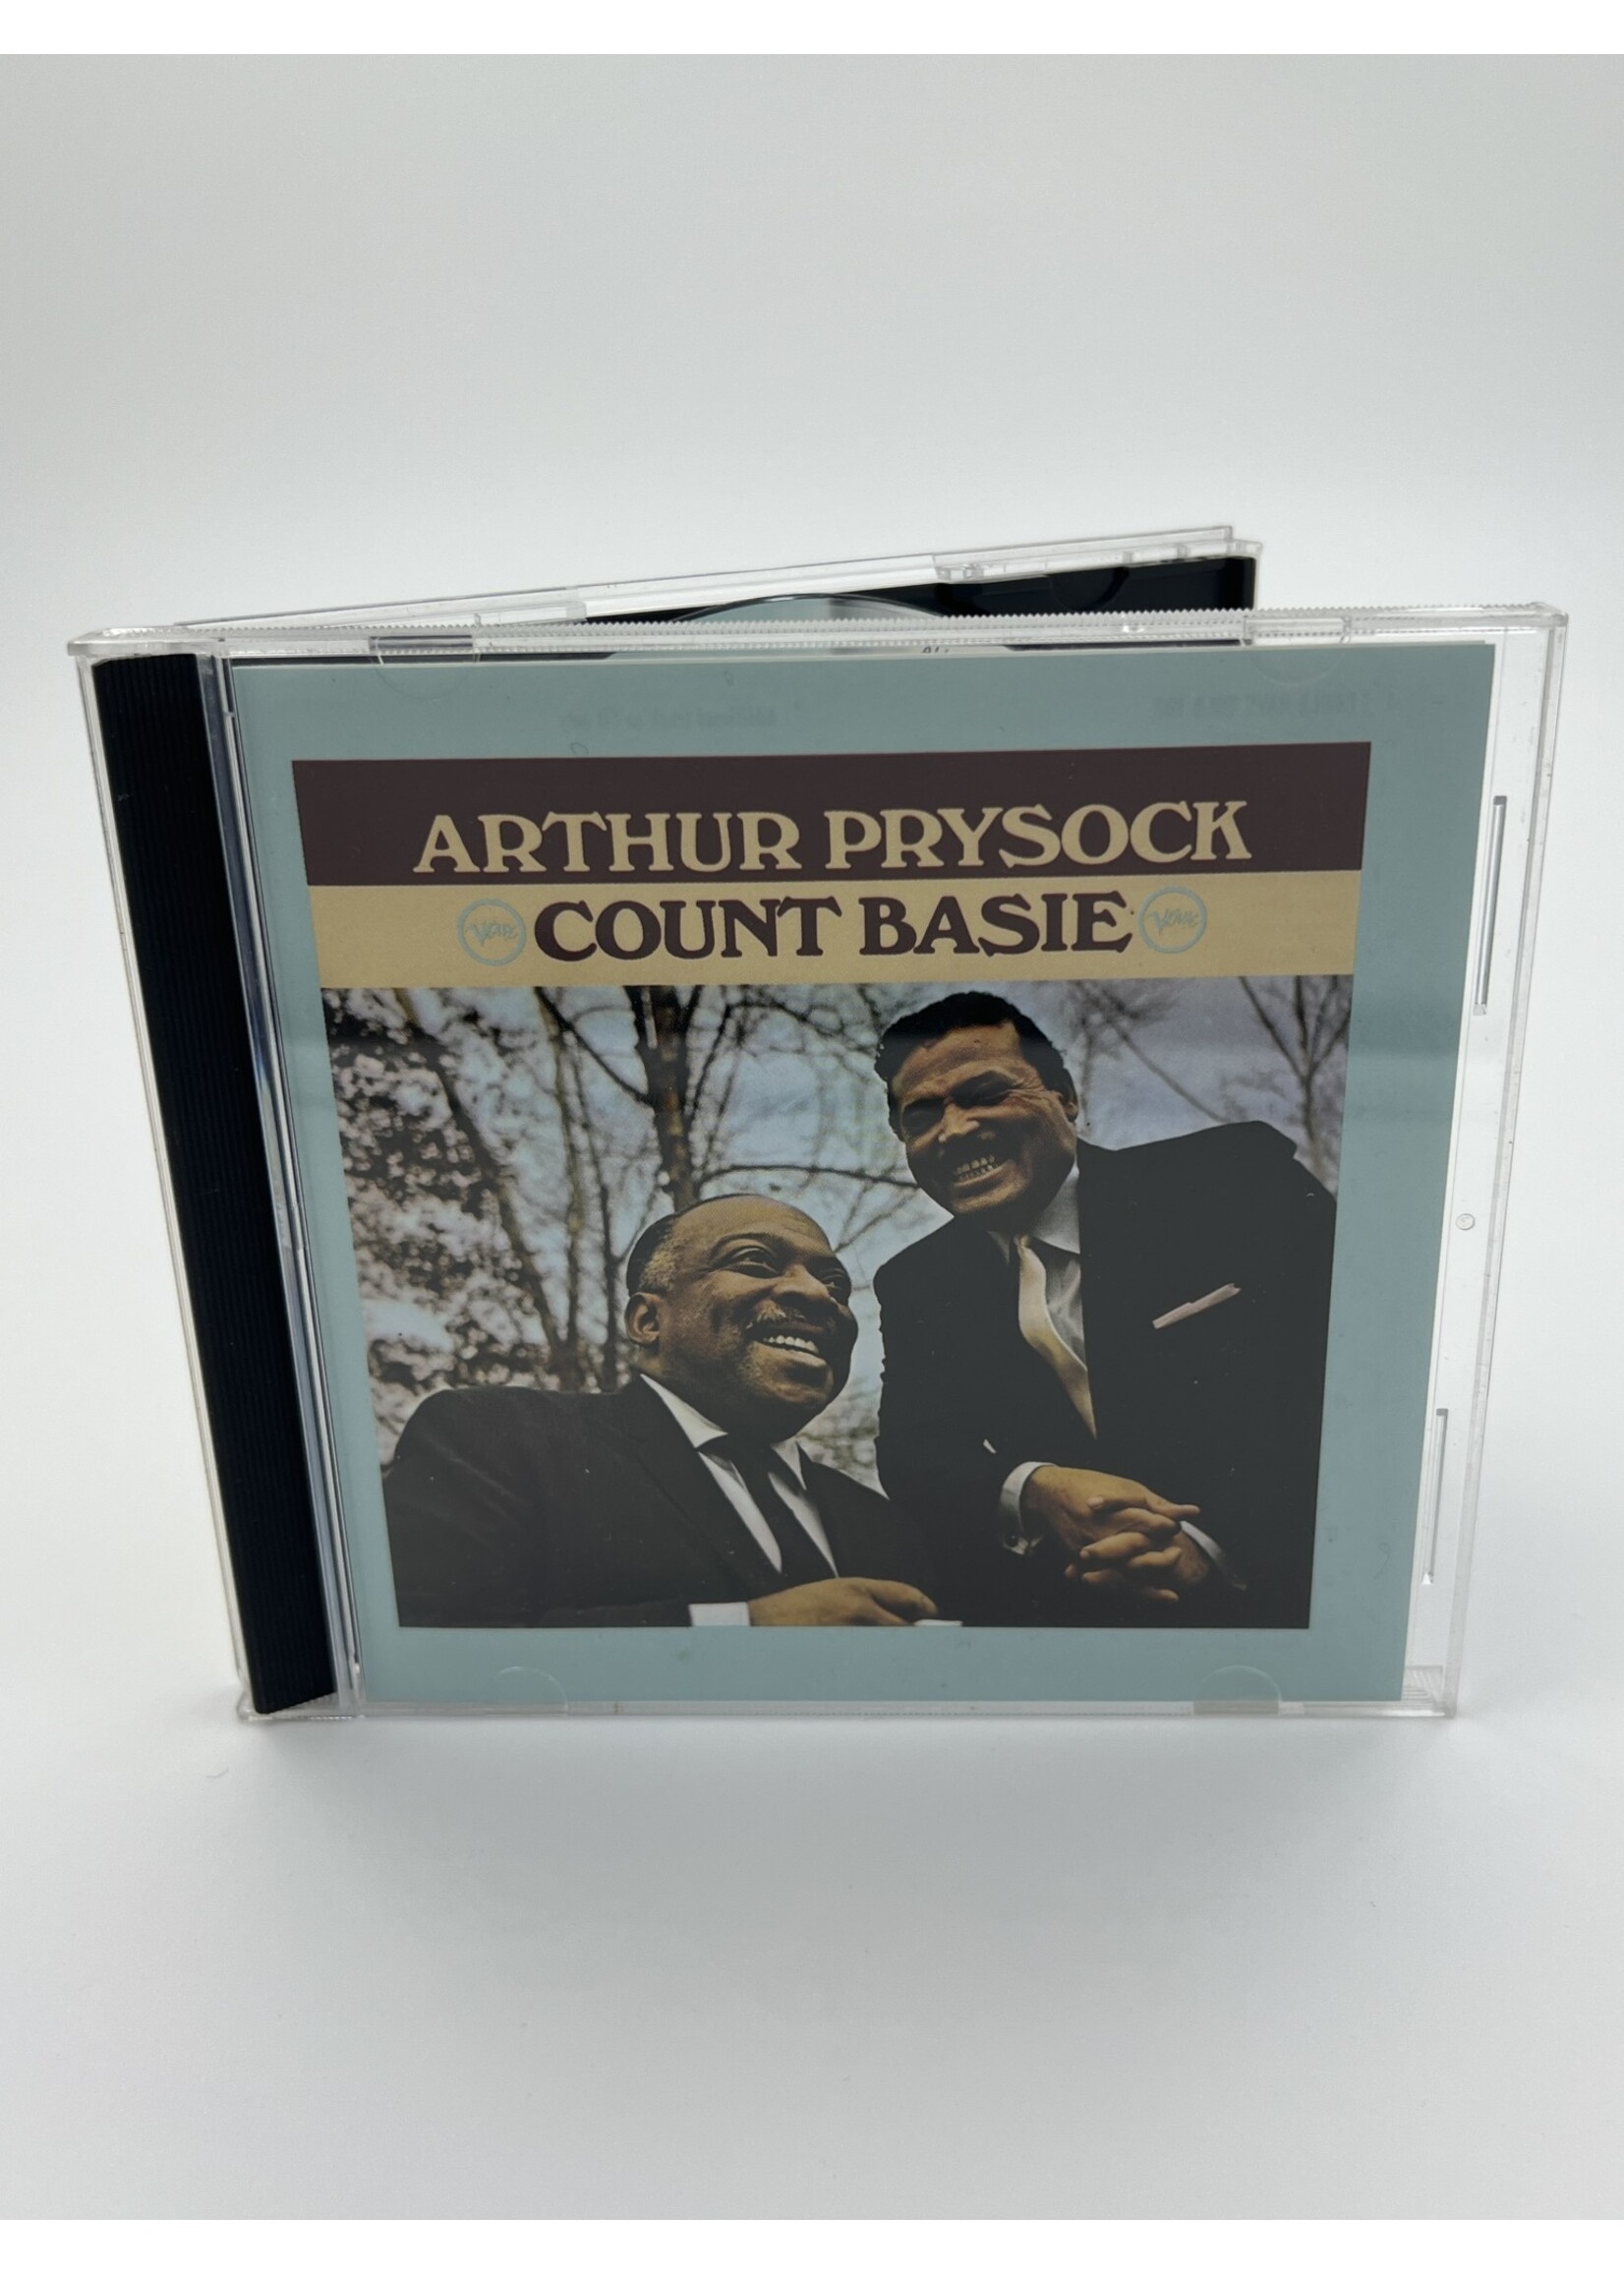 CD Arthur Prysock Count Basie CD